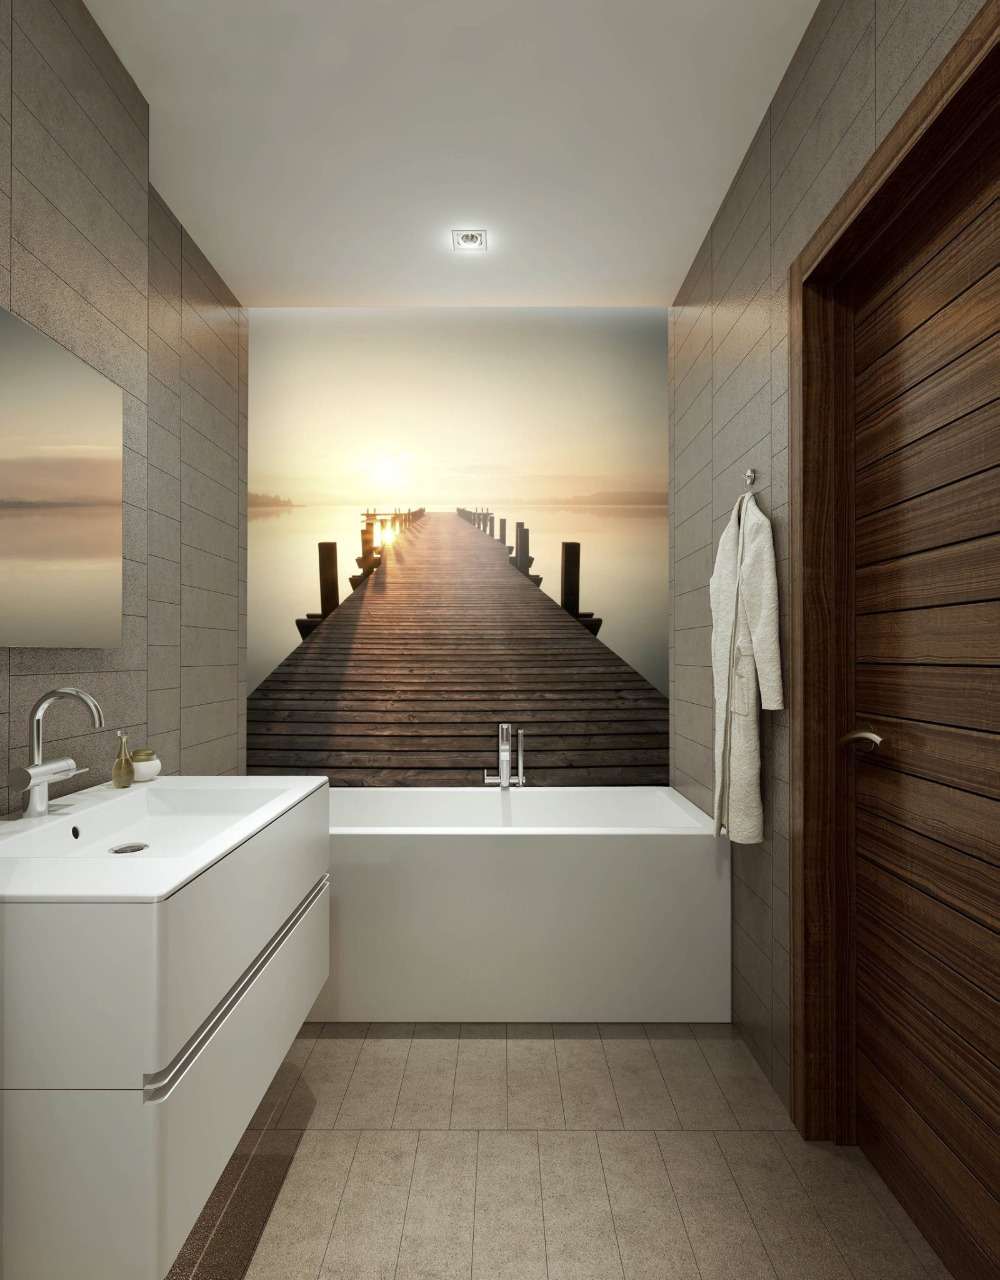 fototapete über badewanne in rustikal gestaltetem bad mit modernem design